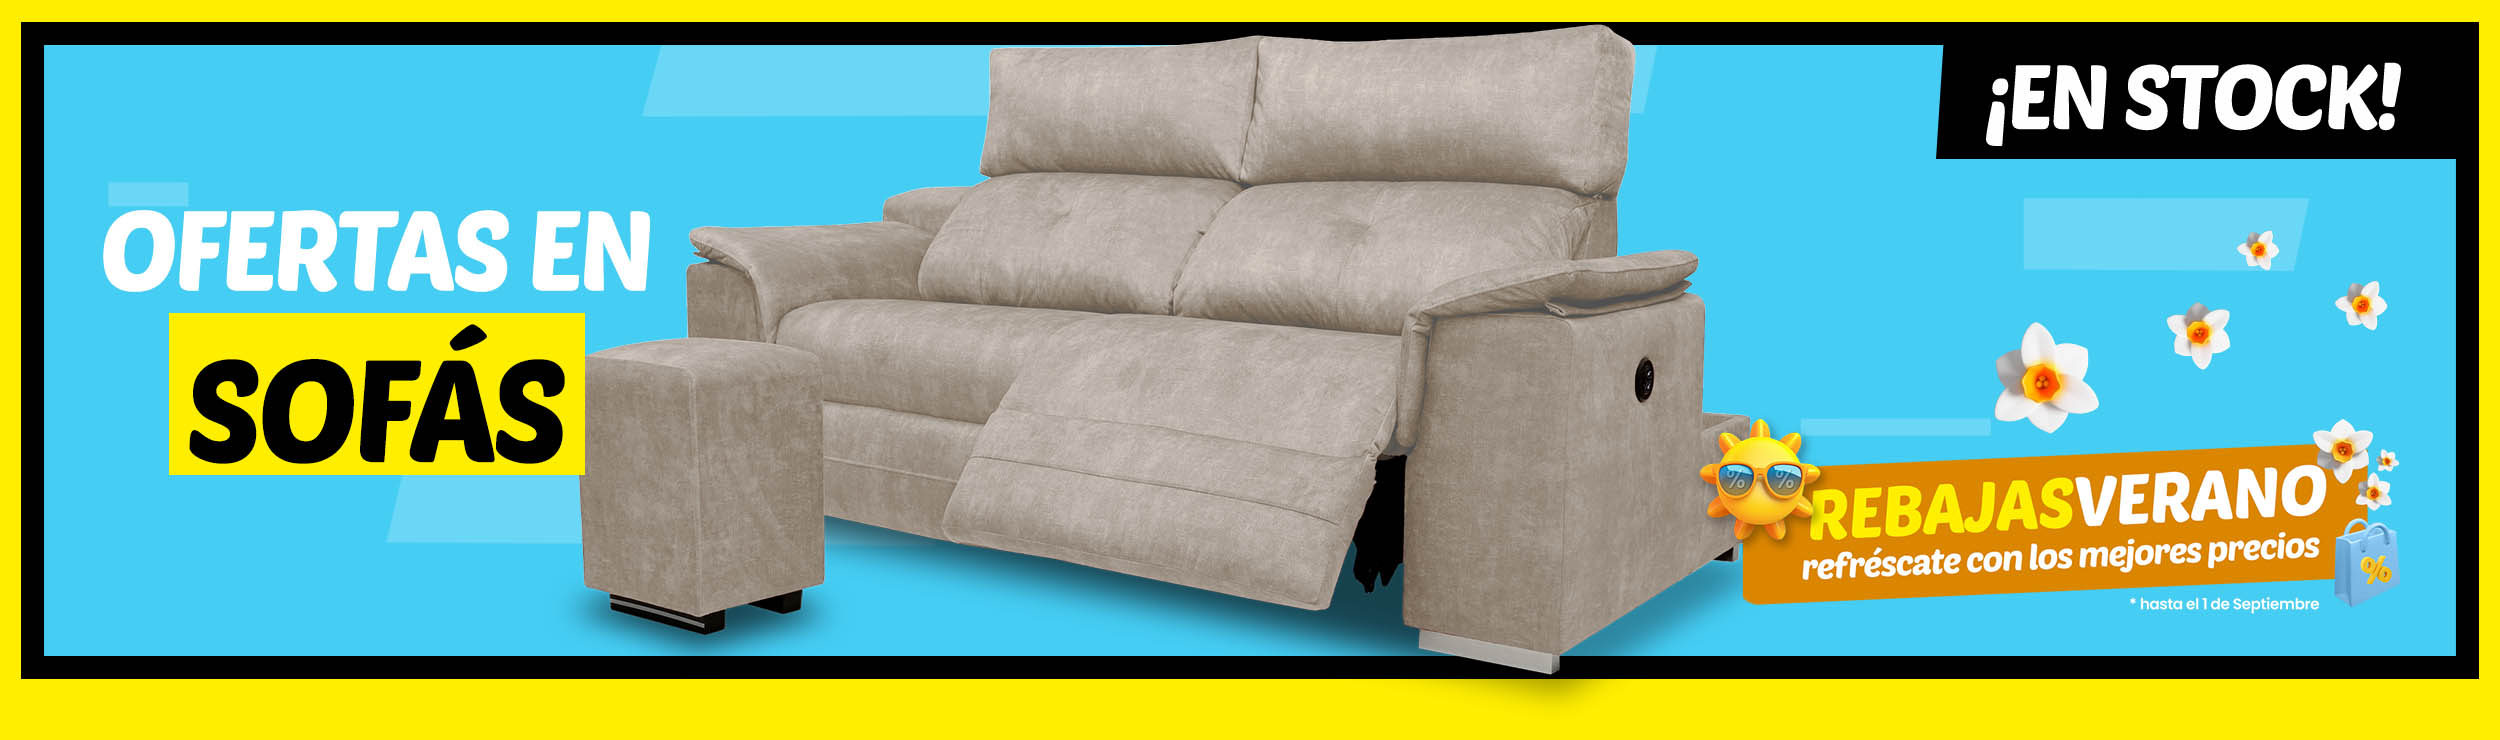 sofa-deslizante-oferta